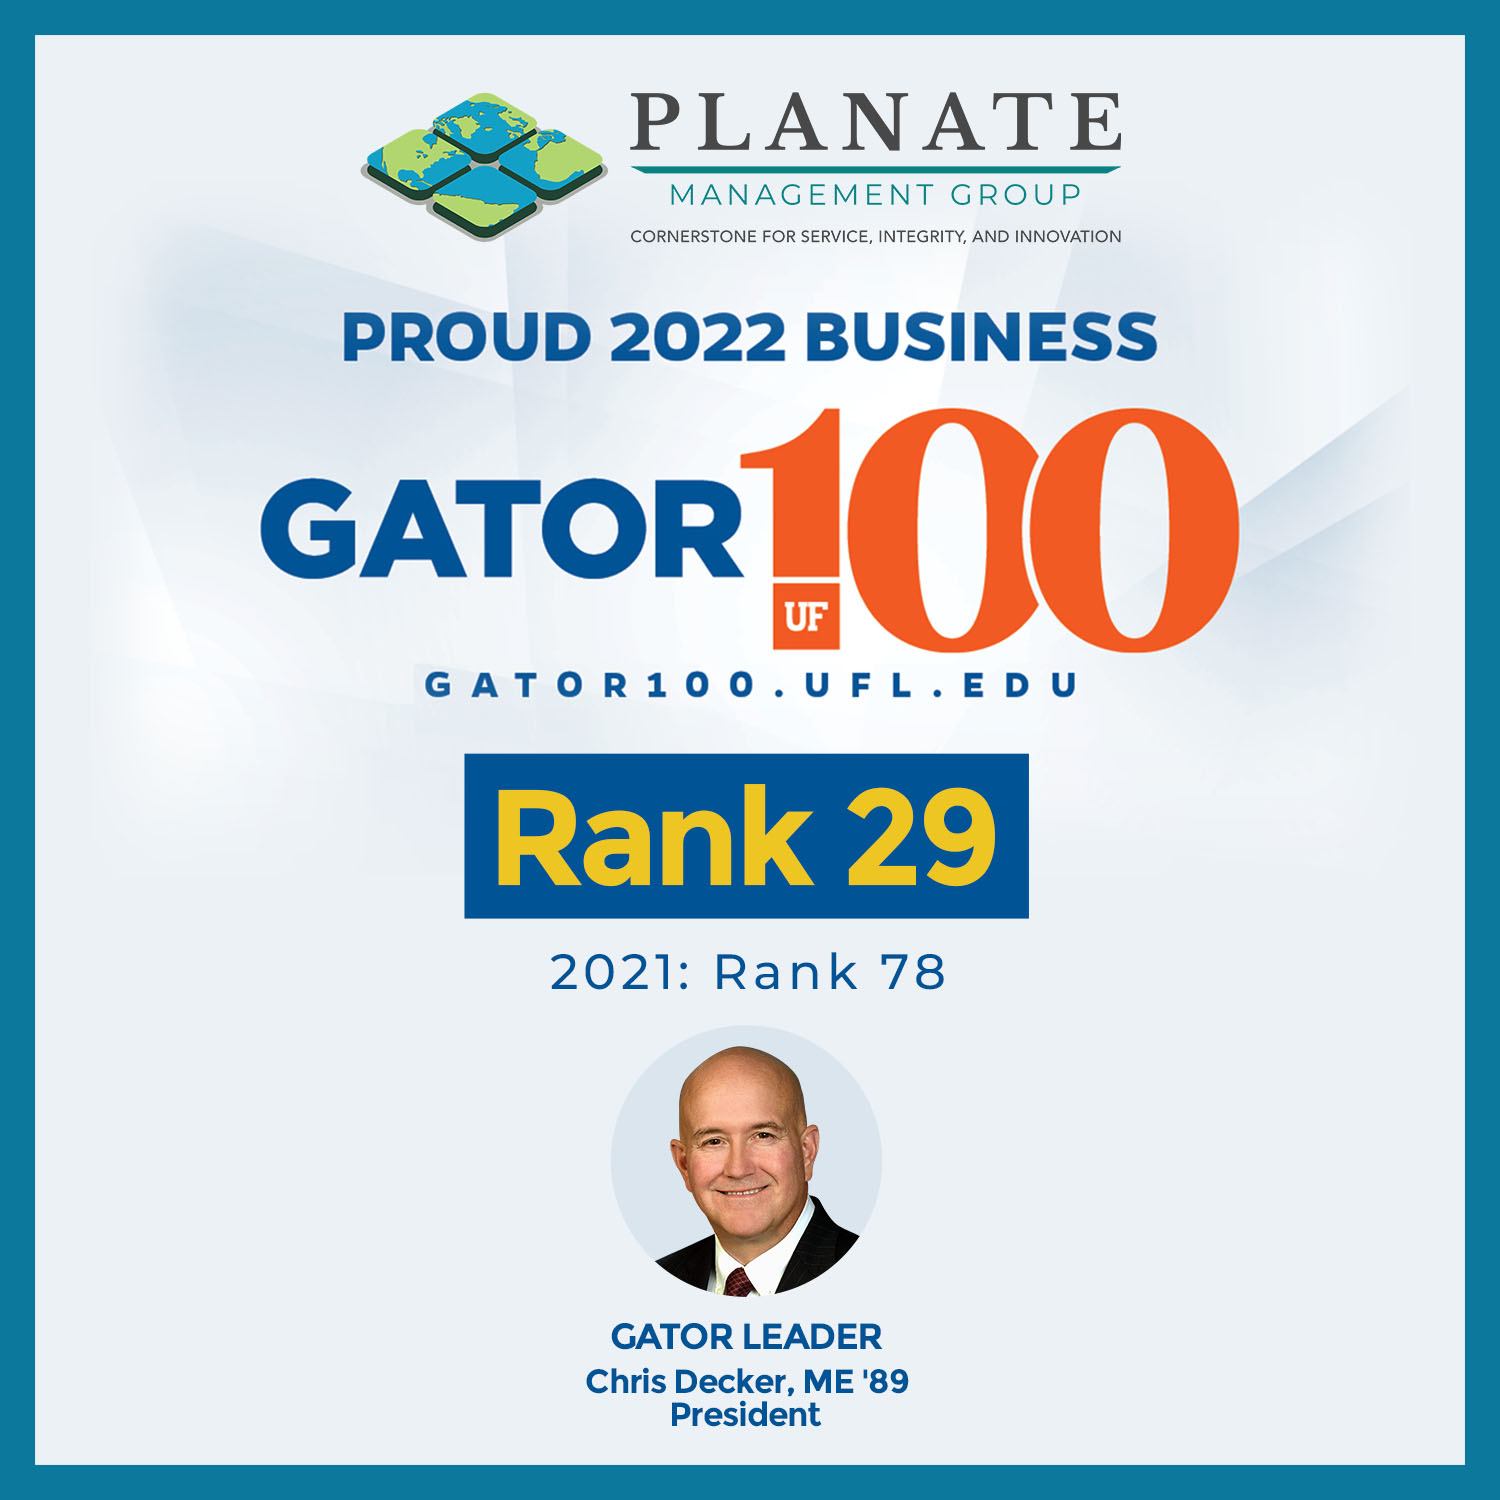 Gator100 Honoree Rank 29 Planate